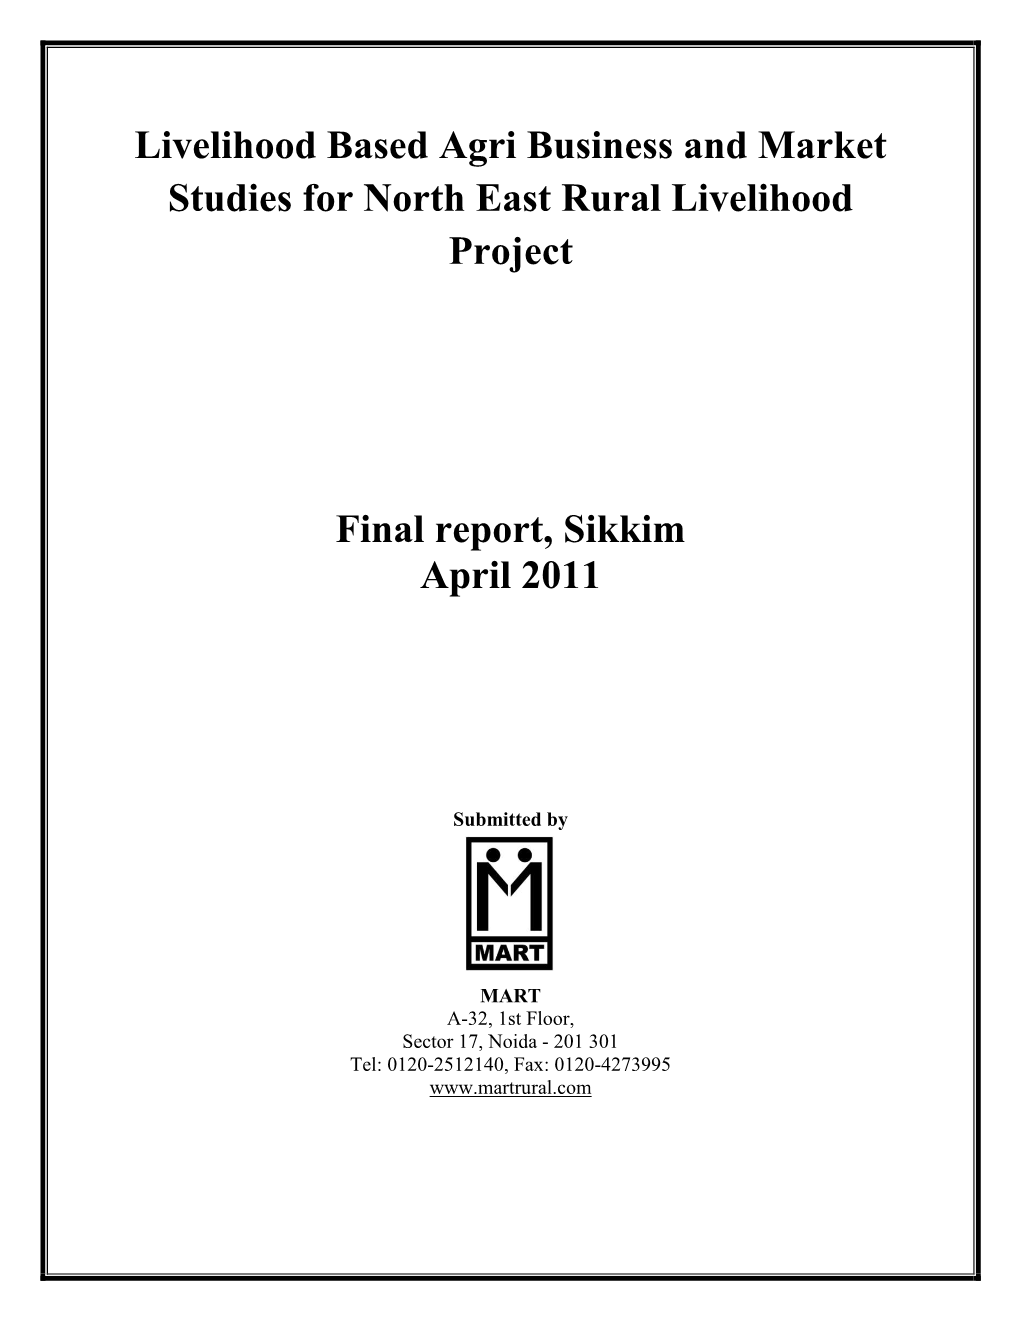 Final Livelihood Study Report of Sikkim.Pdf